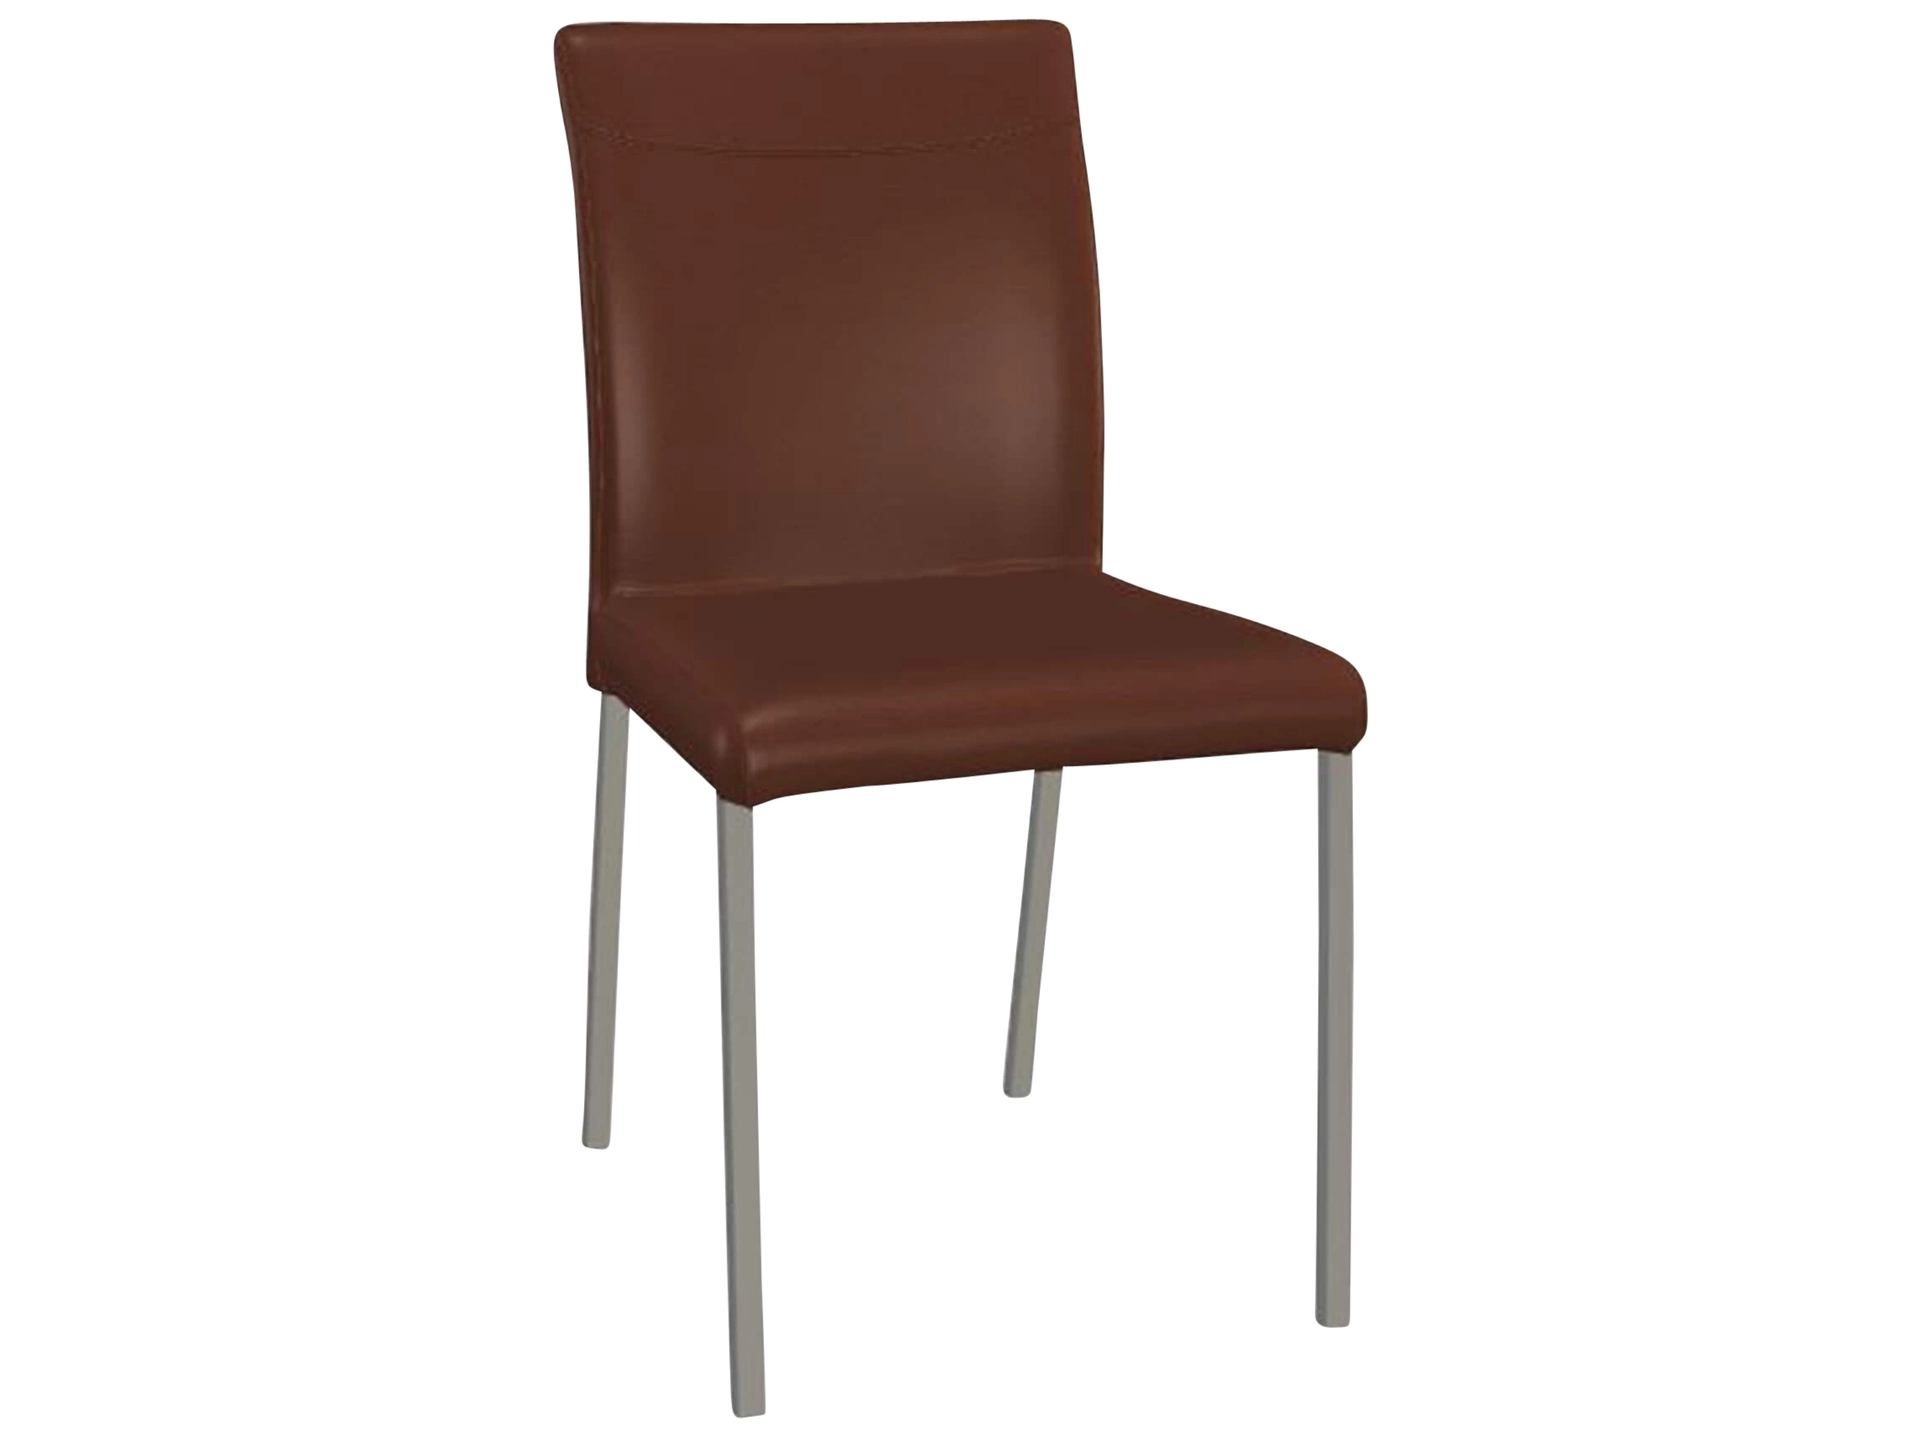 Stuhl Leicht Premium Trendstühle / Farbe: Terra / Material: Leder